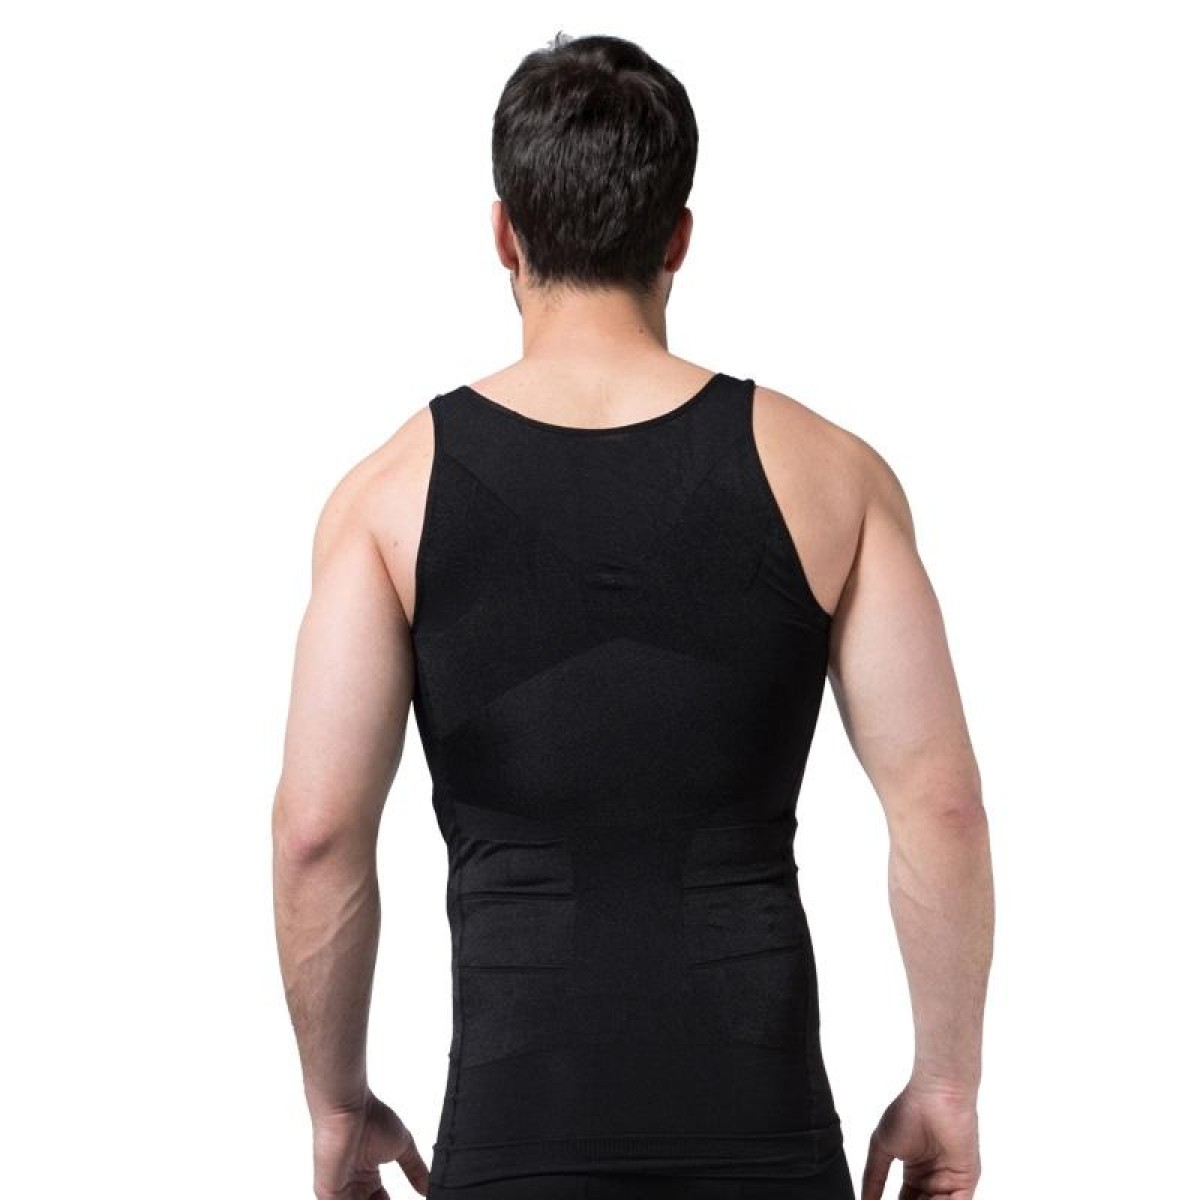 Men Slimming Body Shaper Vest Underwear, Size: XXL(Black)